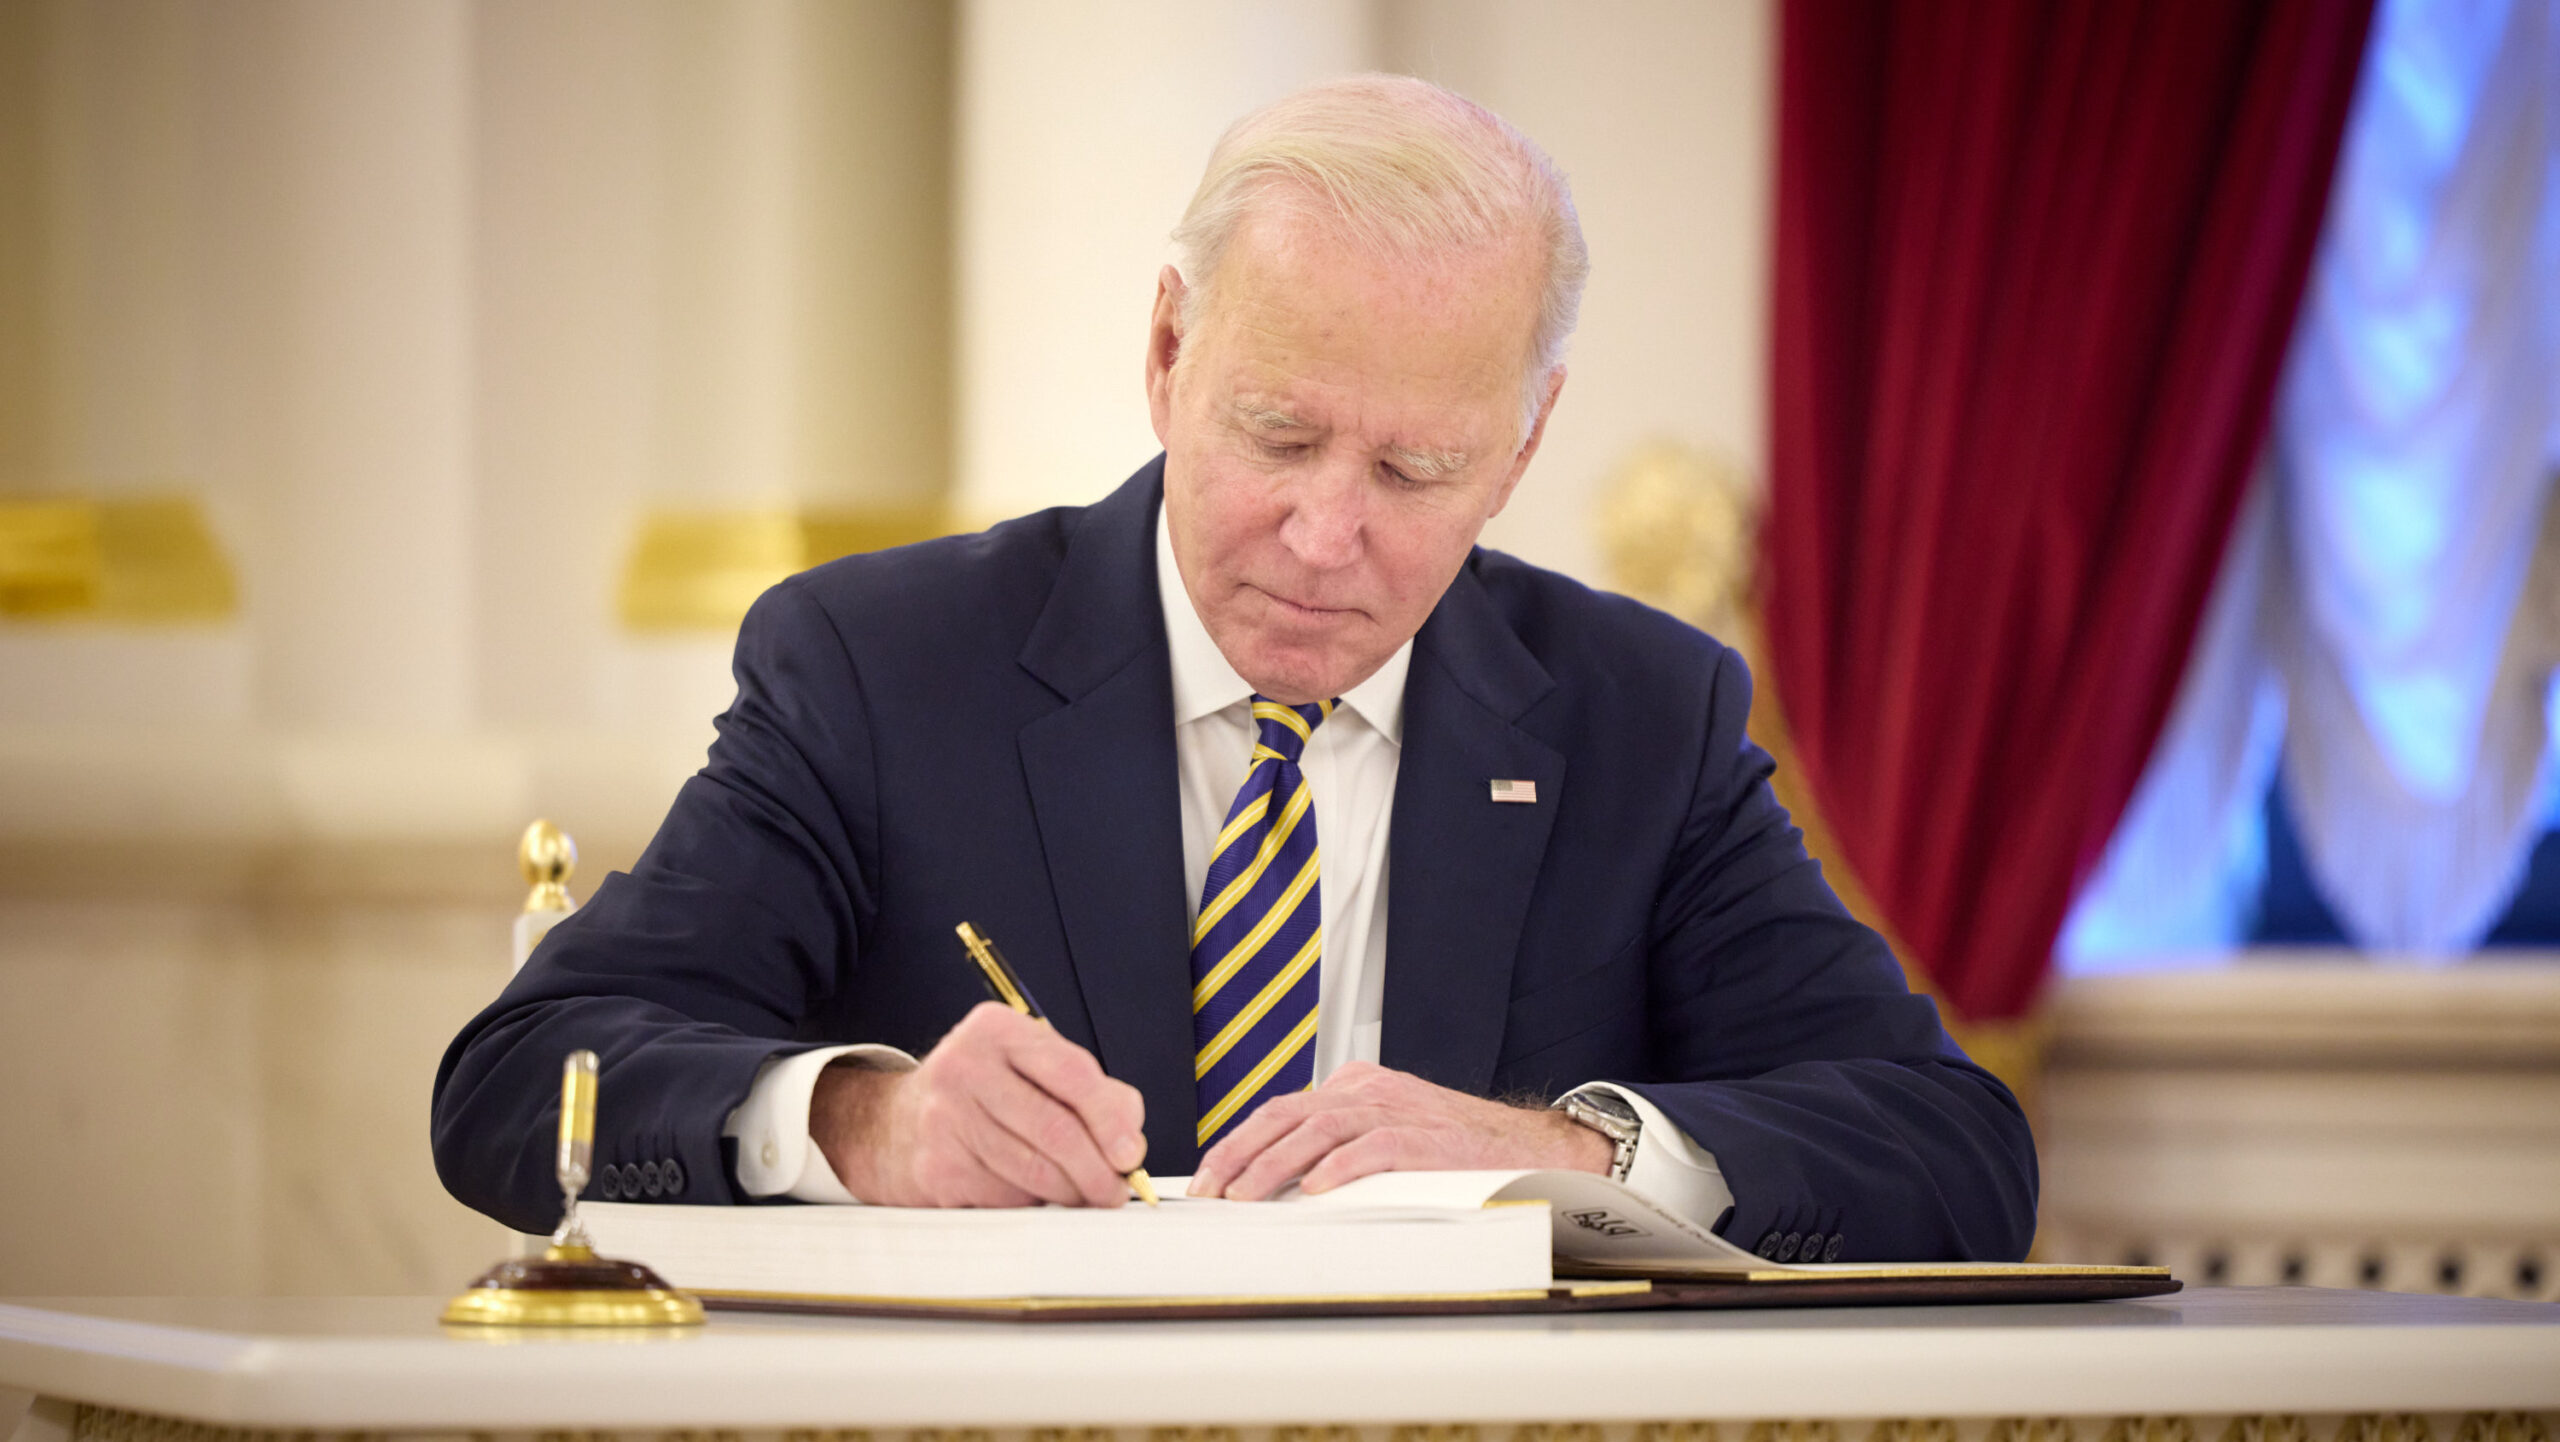 Joe Biden cere ajutor financiar